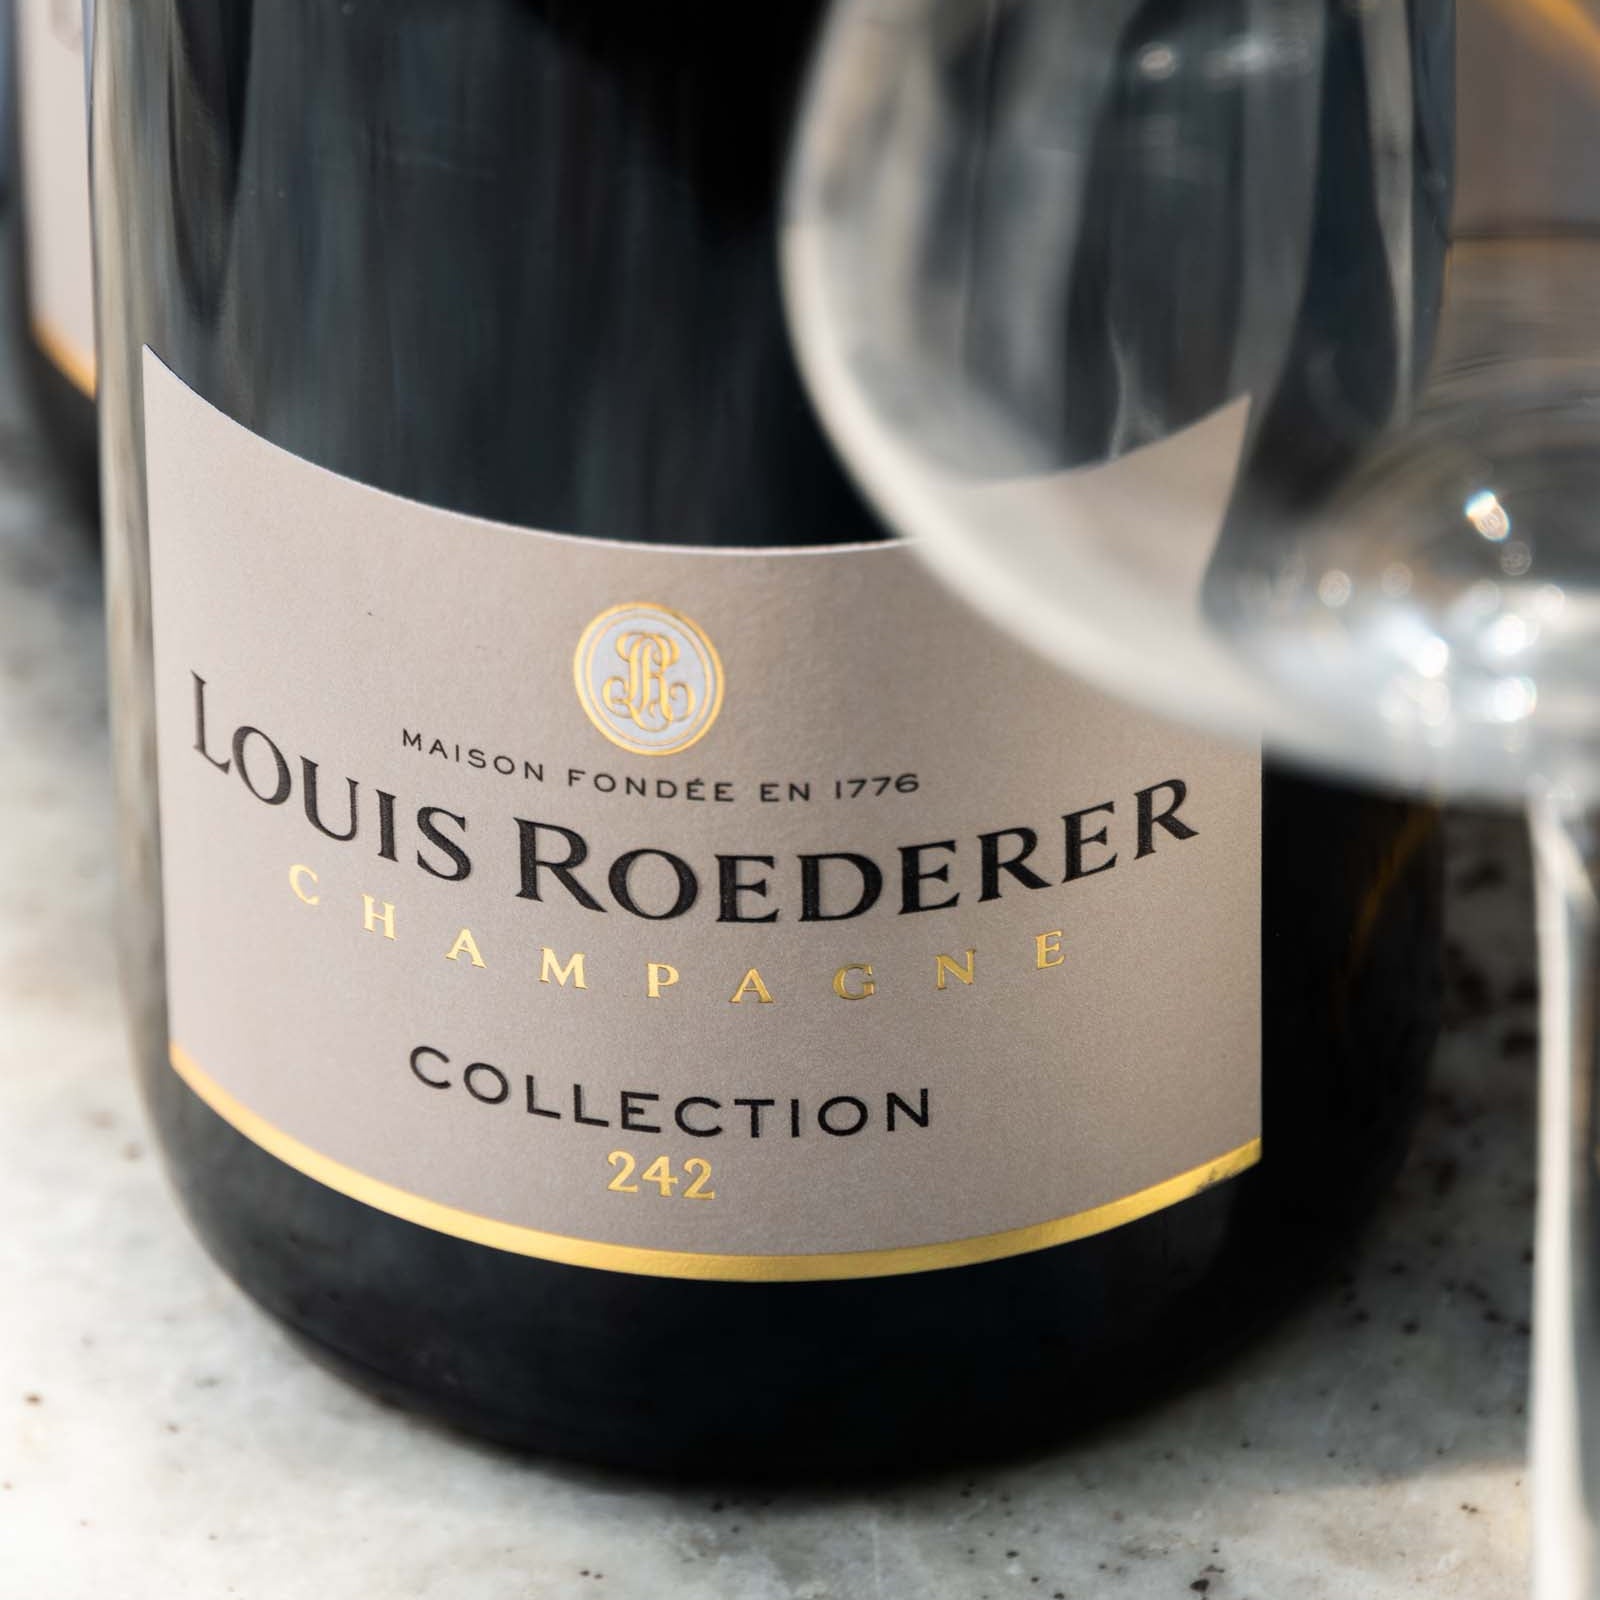 Historien bag Louis Roederer champagne - PremiumBottles